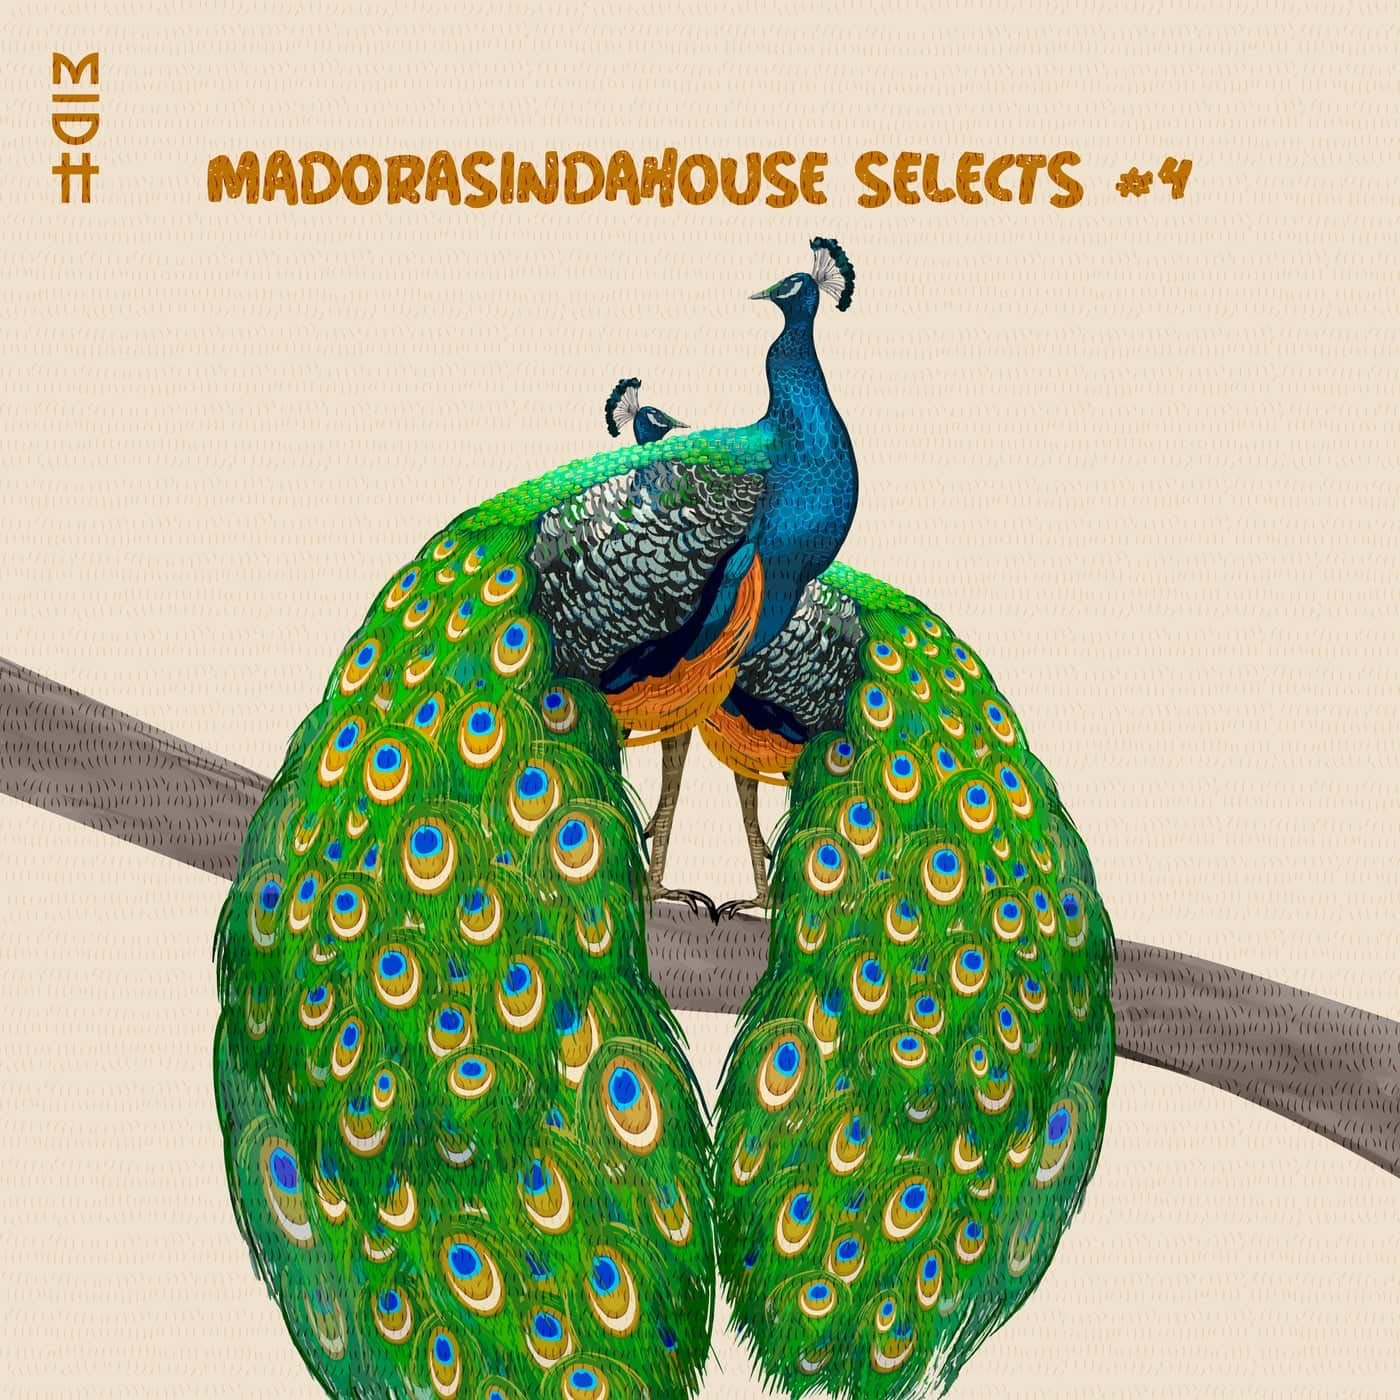 image cover: VA - Madorasindahouse Selects #4 / MIDH042